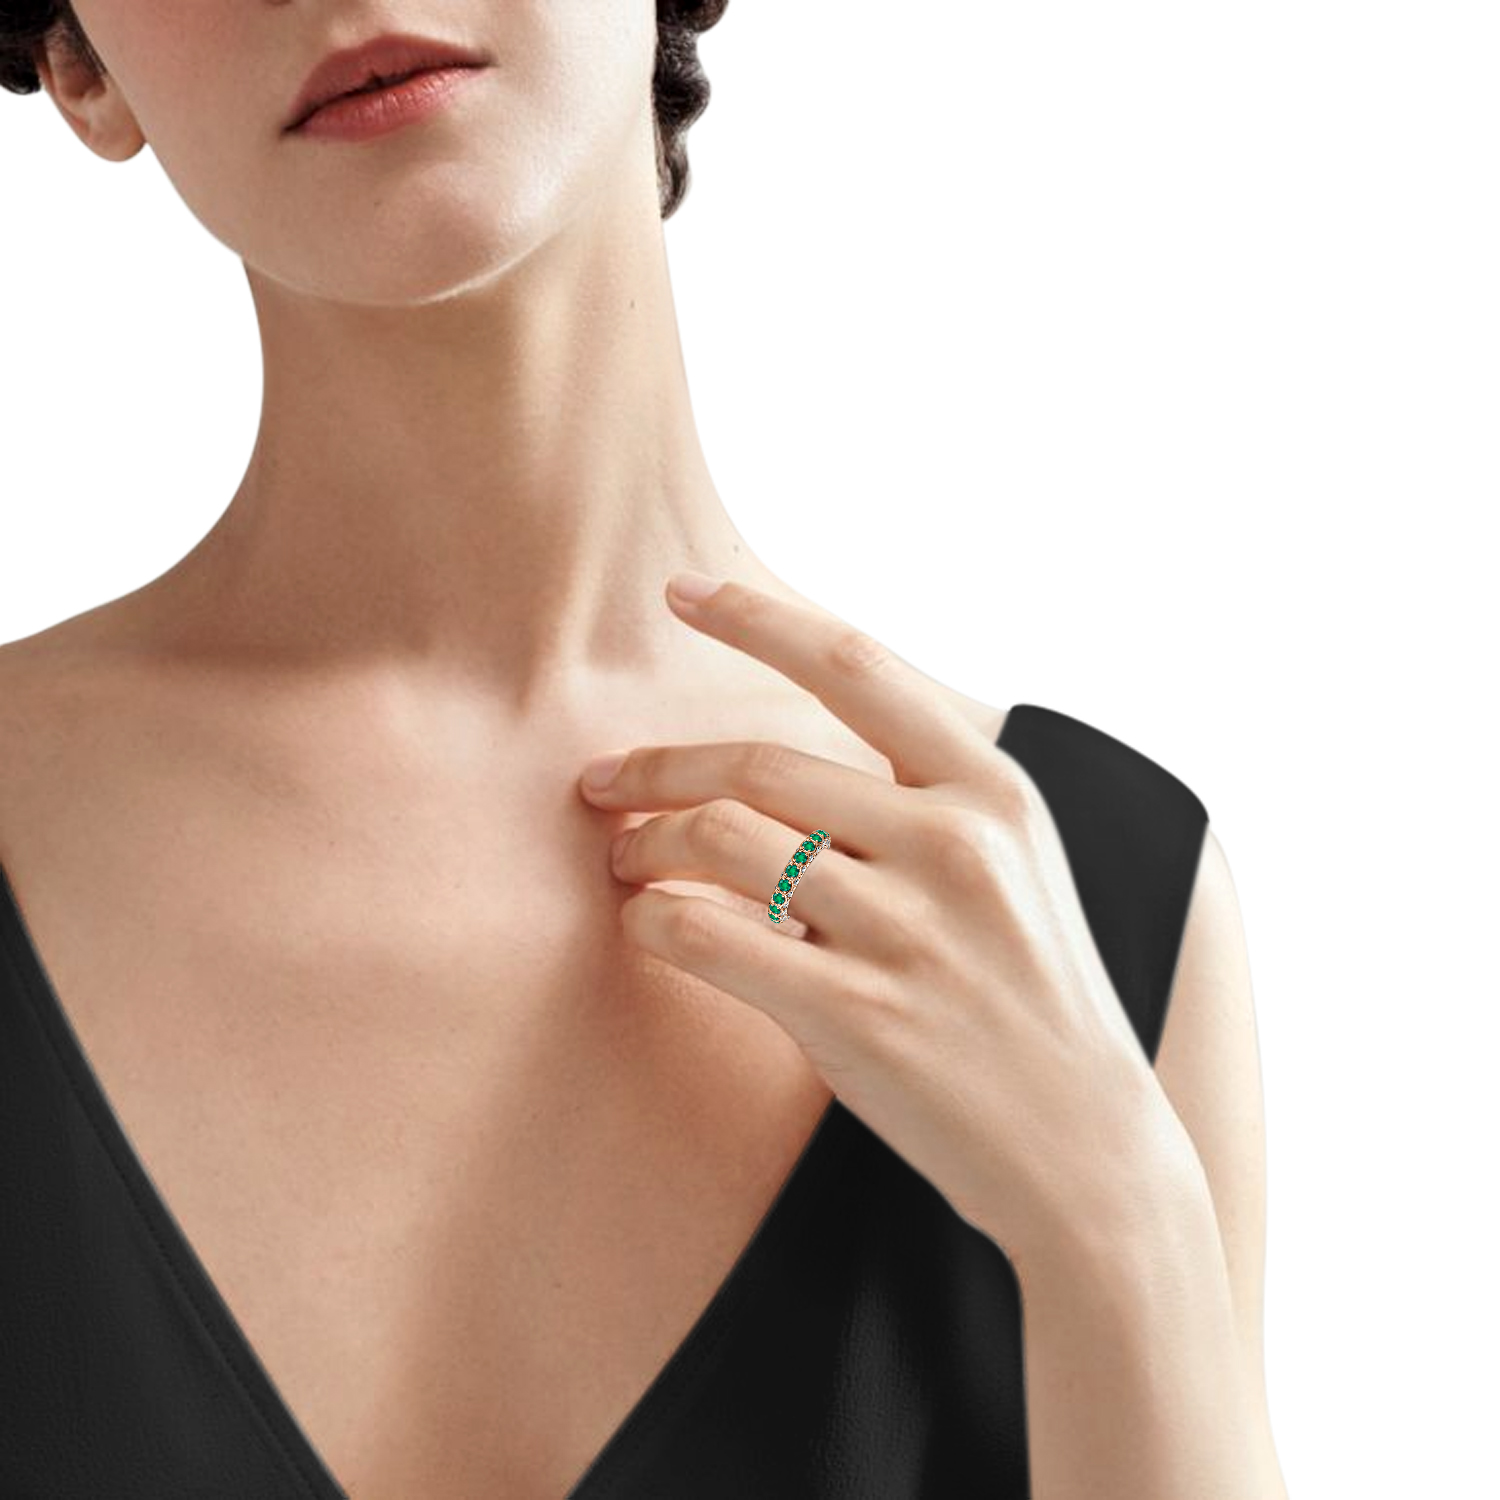 Hexa Green Emerald And Diamond Wedding Ring In Rose Gold